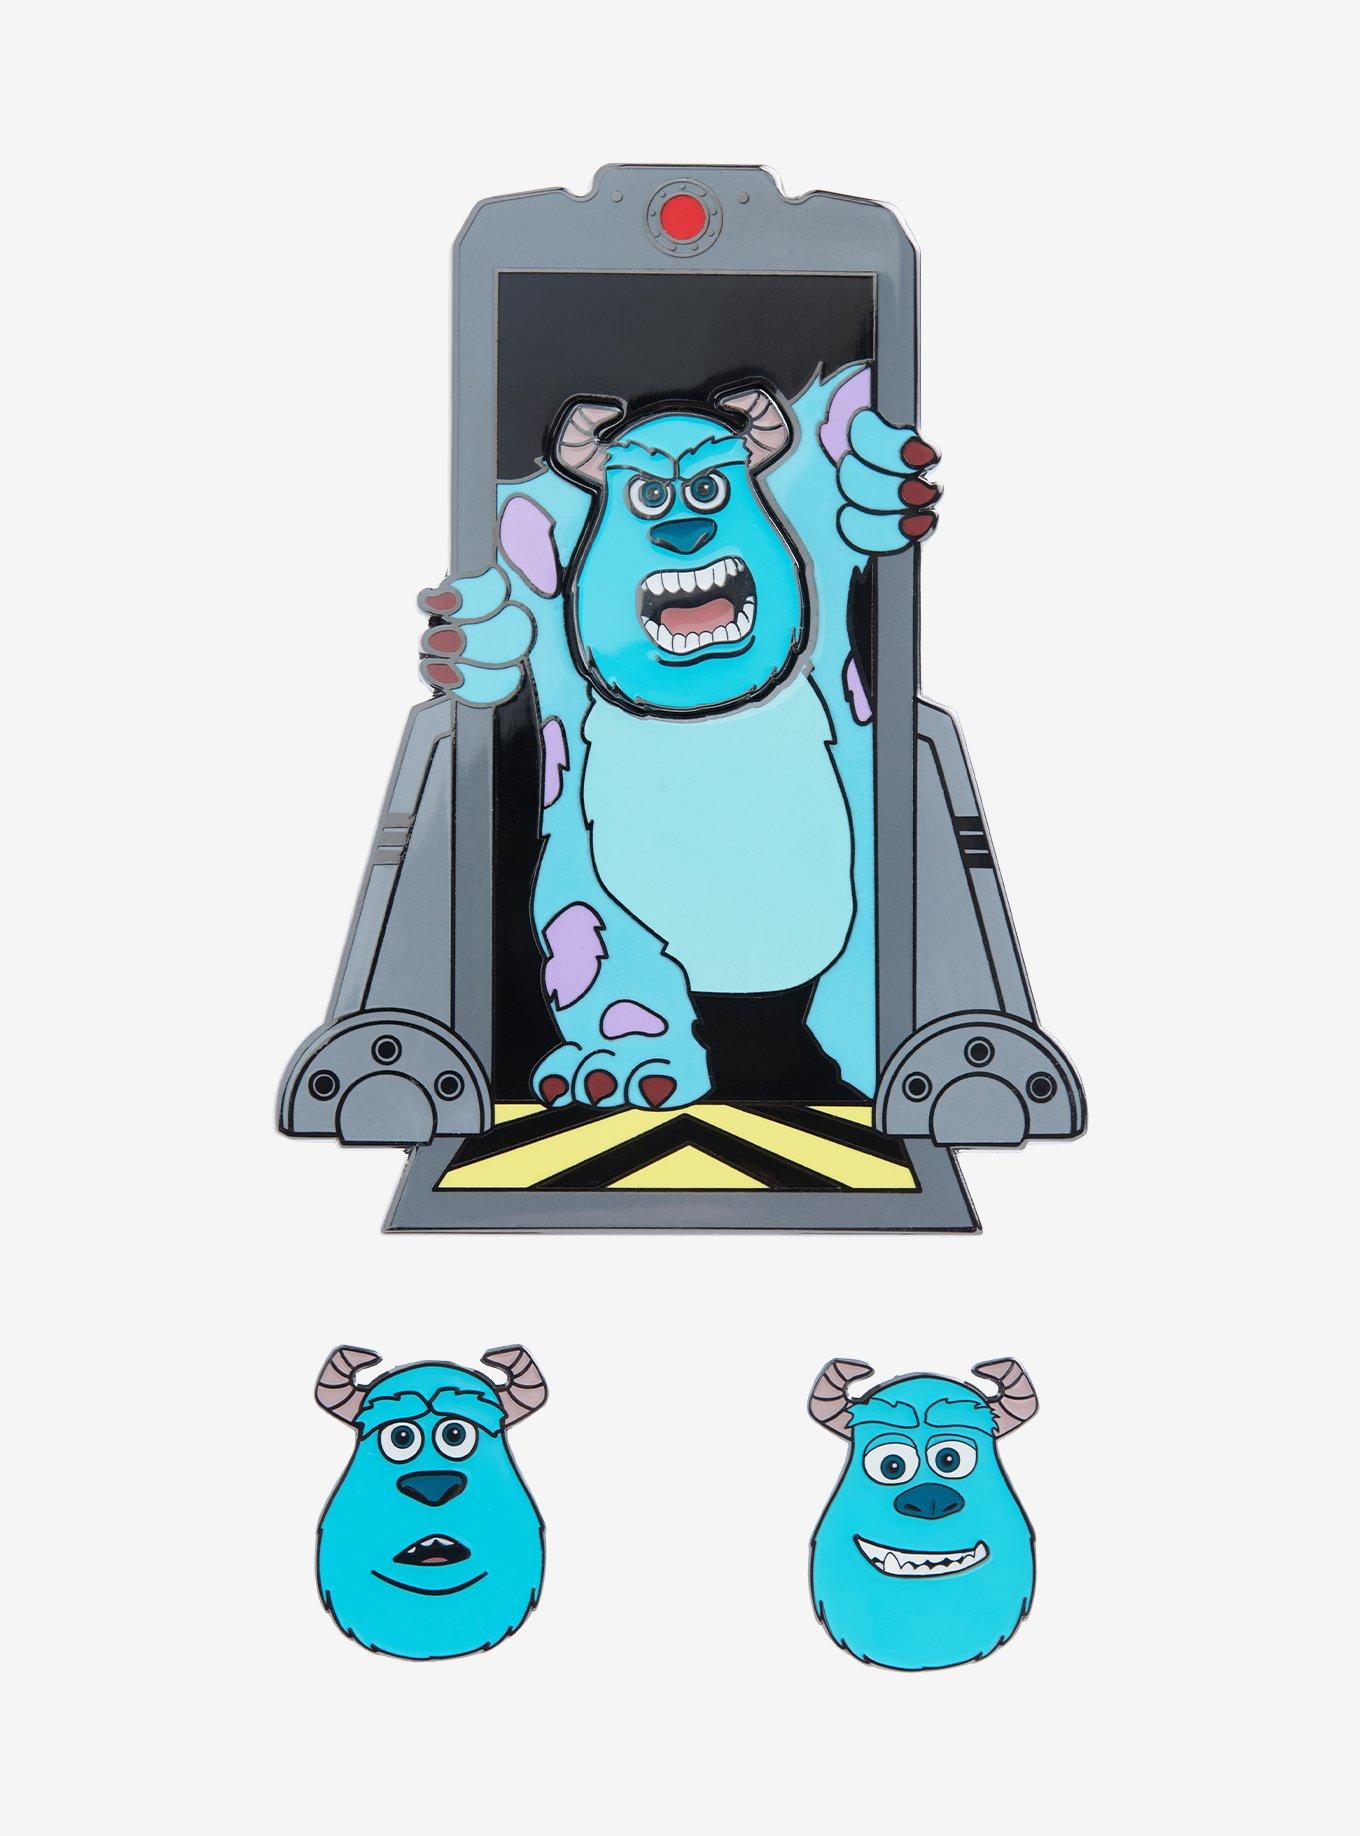 Disney Pixar Monsters Inc Boo in Disguise Crossbody Bag